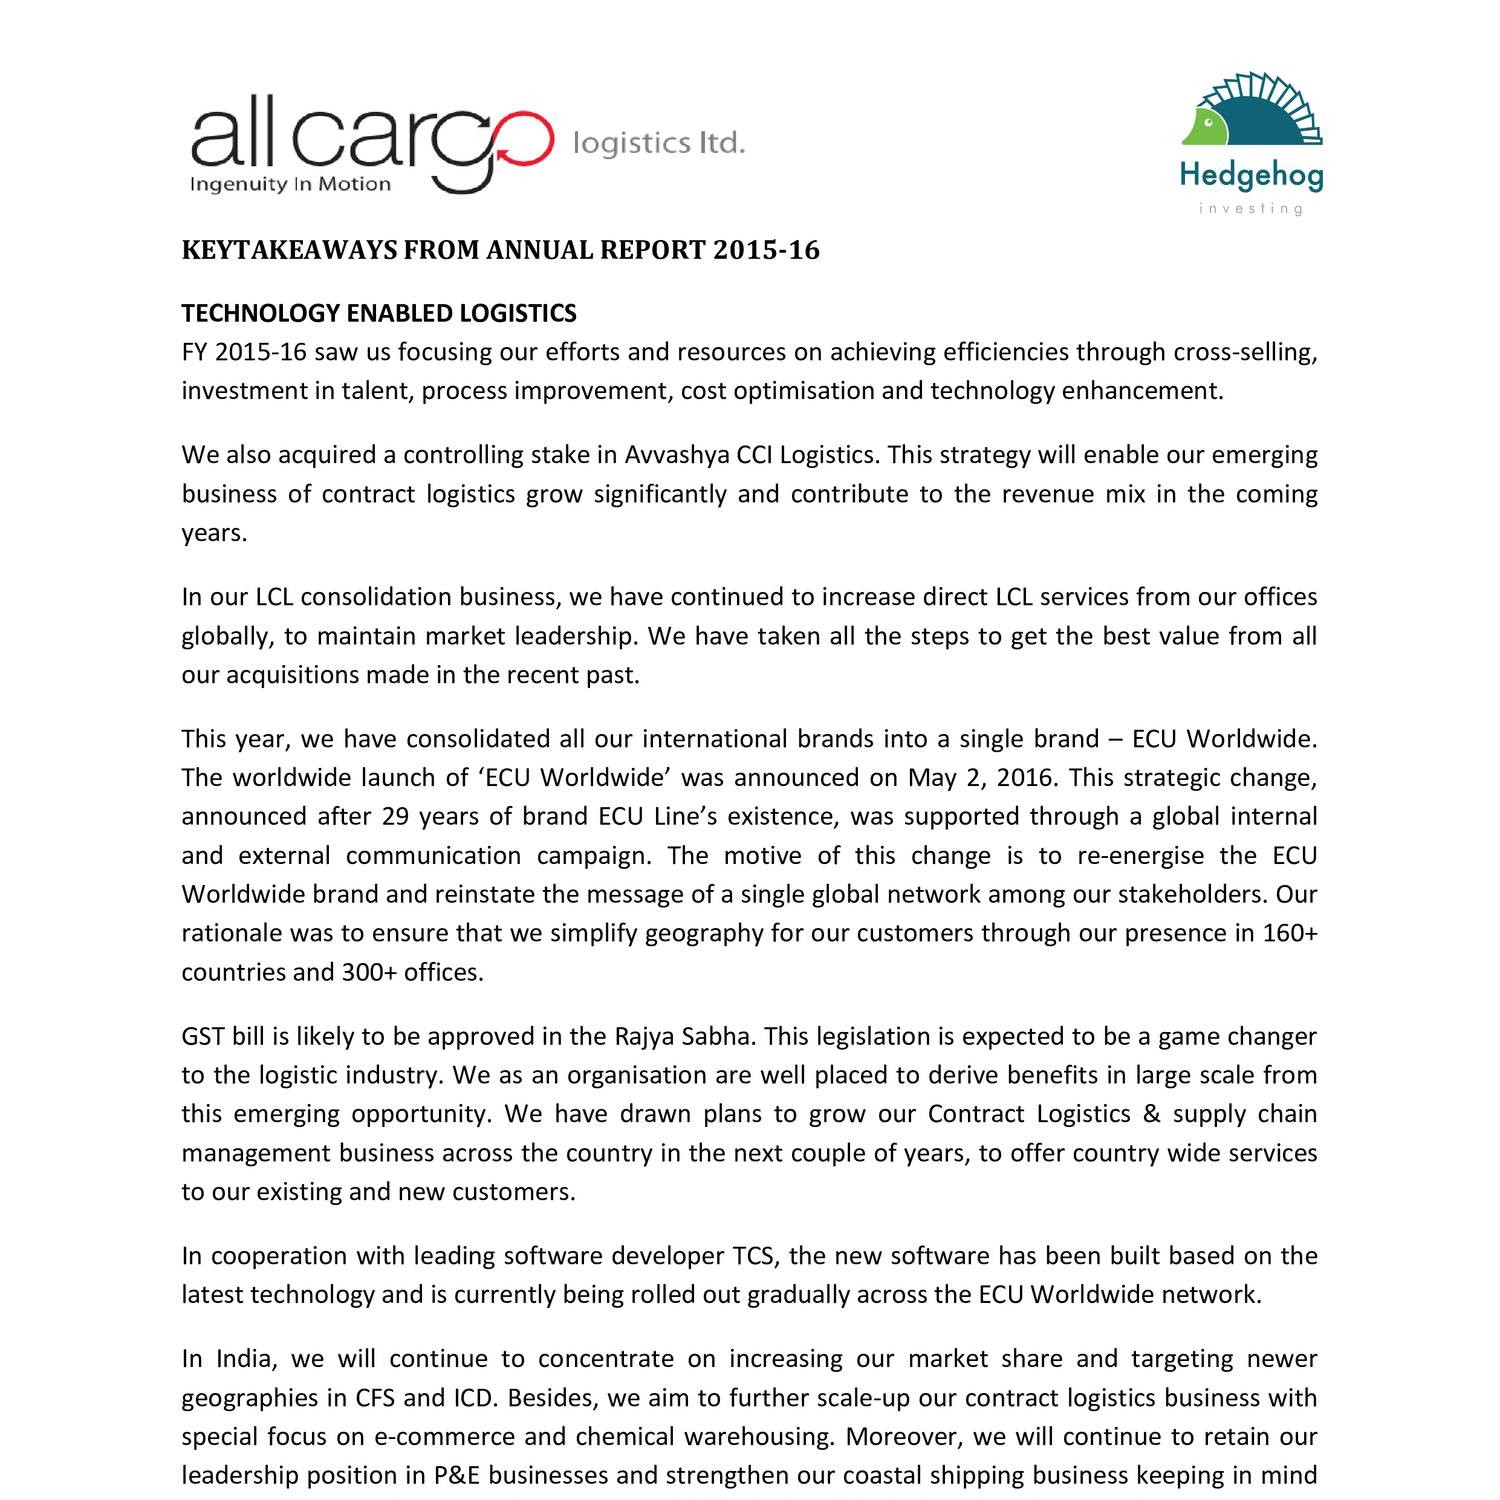 allcargo research report pdf